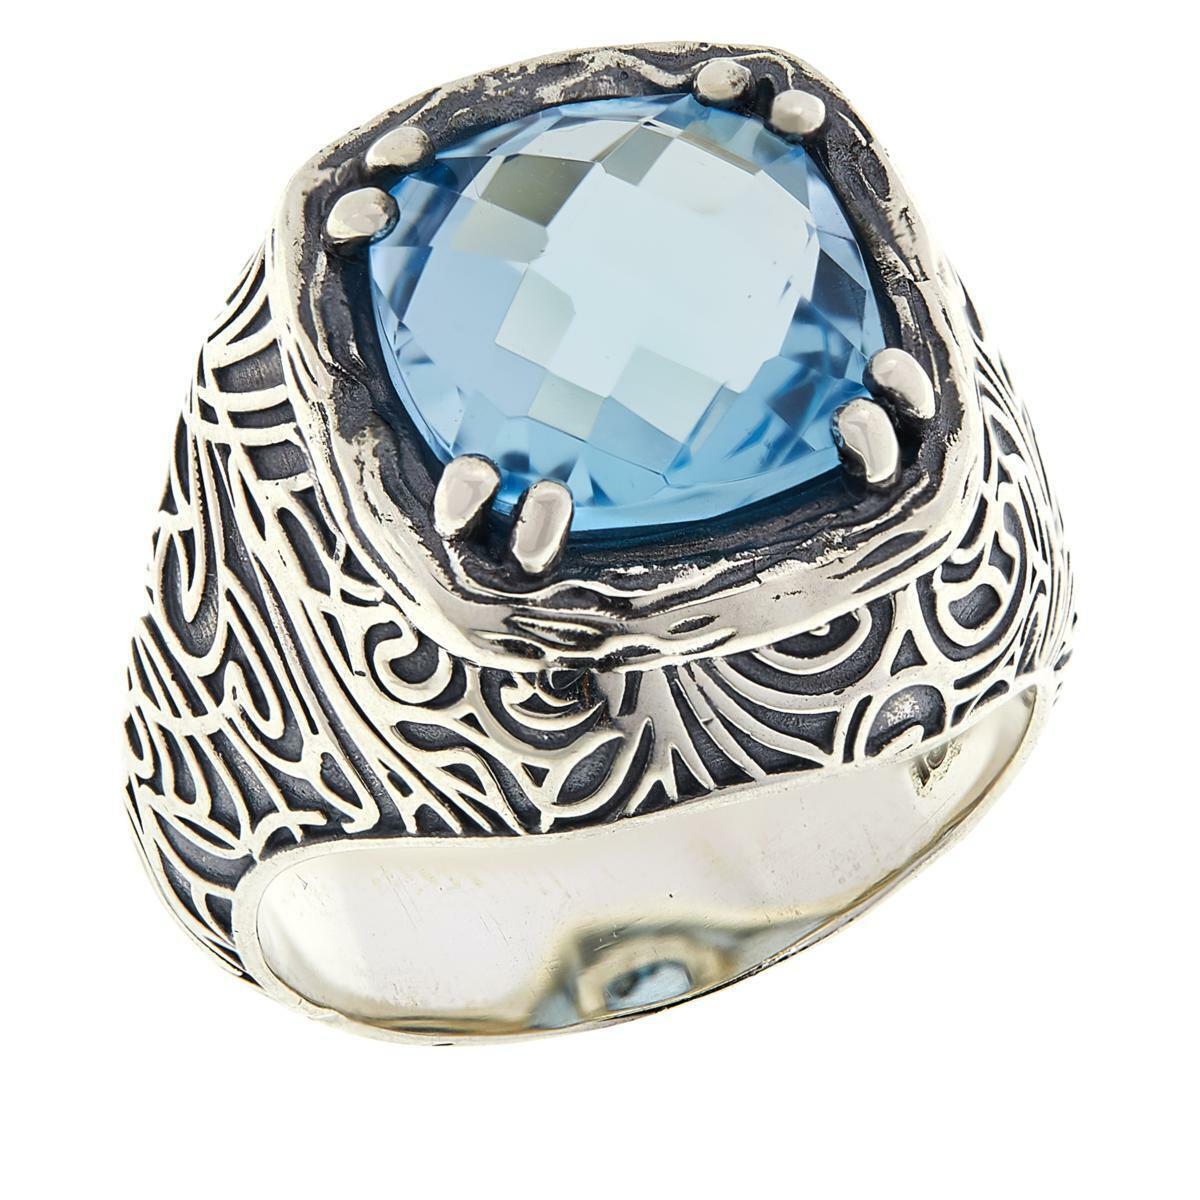 LiPaz 4.5ctw Blue Topaz Sterling Silver Ring Size 5 HSN $100.00